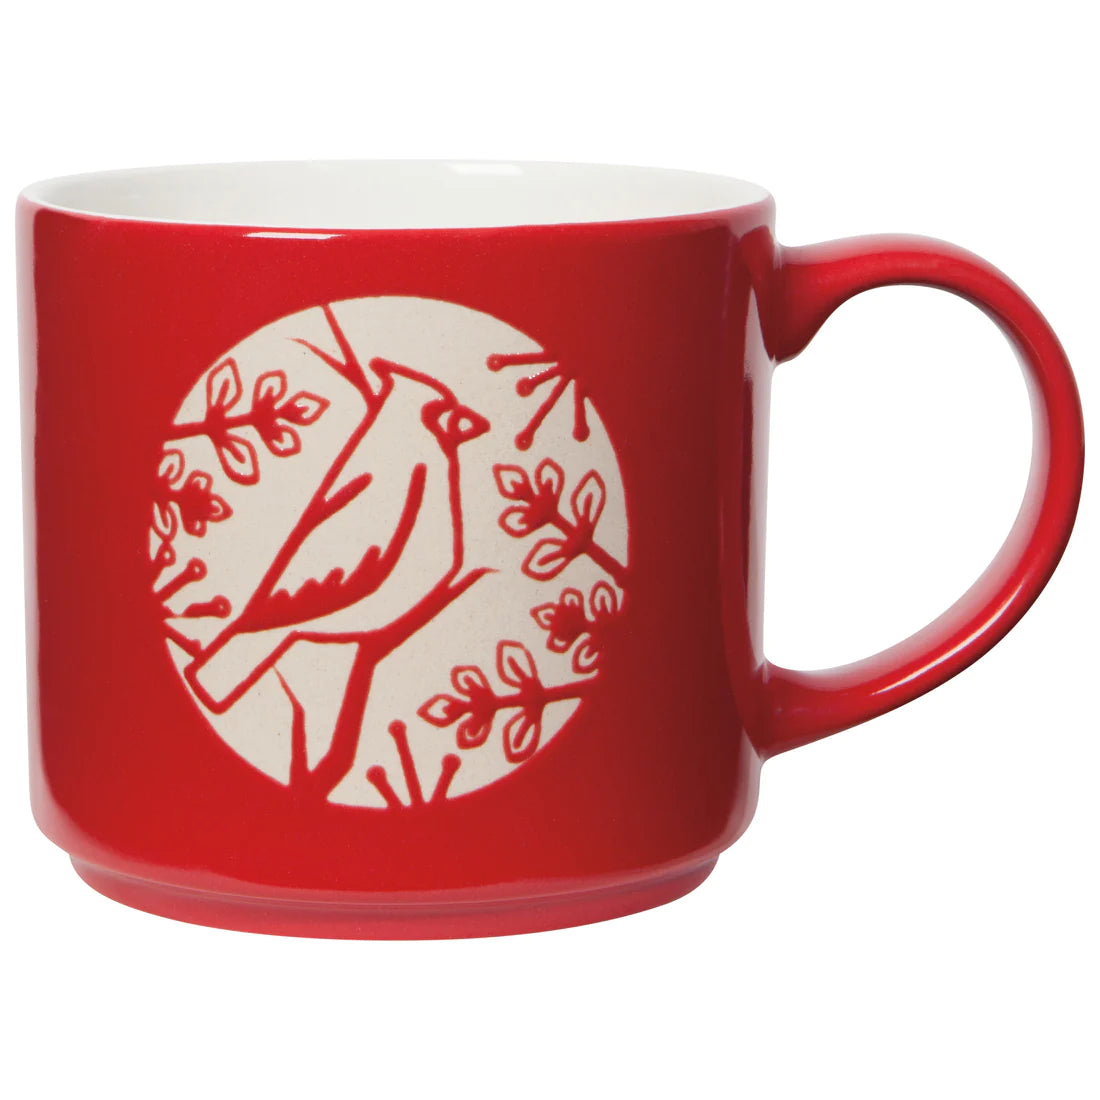 Stacking Mug - Cardinal